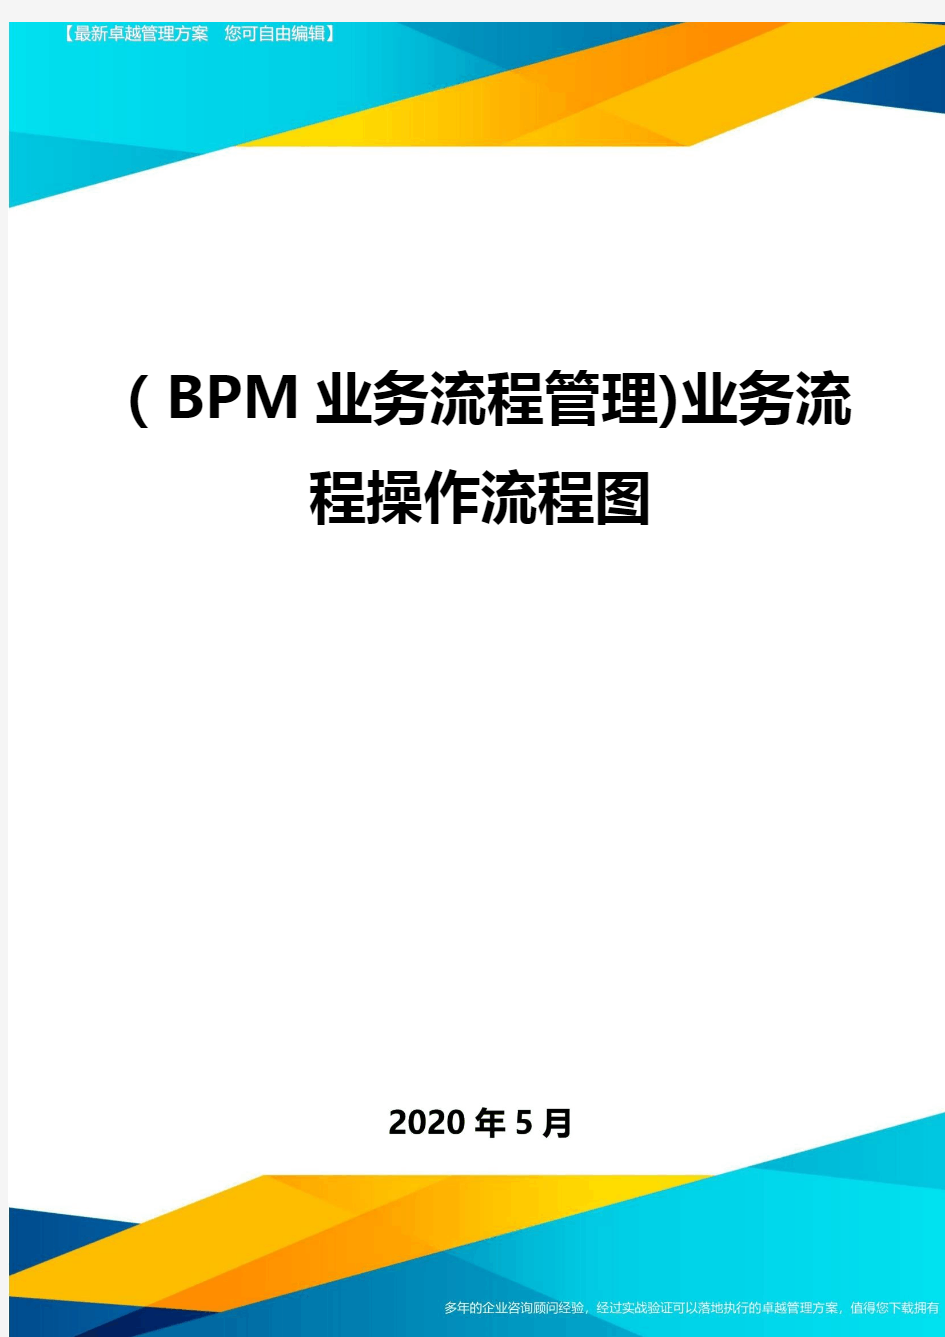 (BPM业务流程管理)业务流程操作流程图.